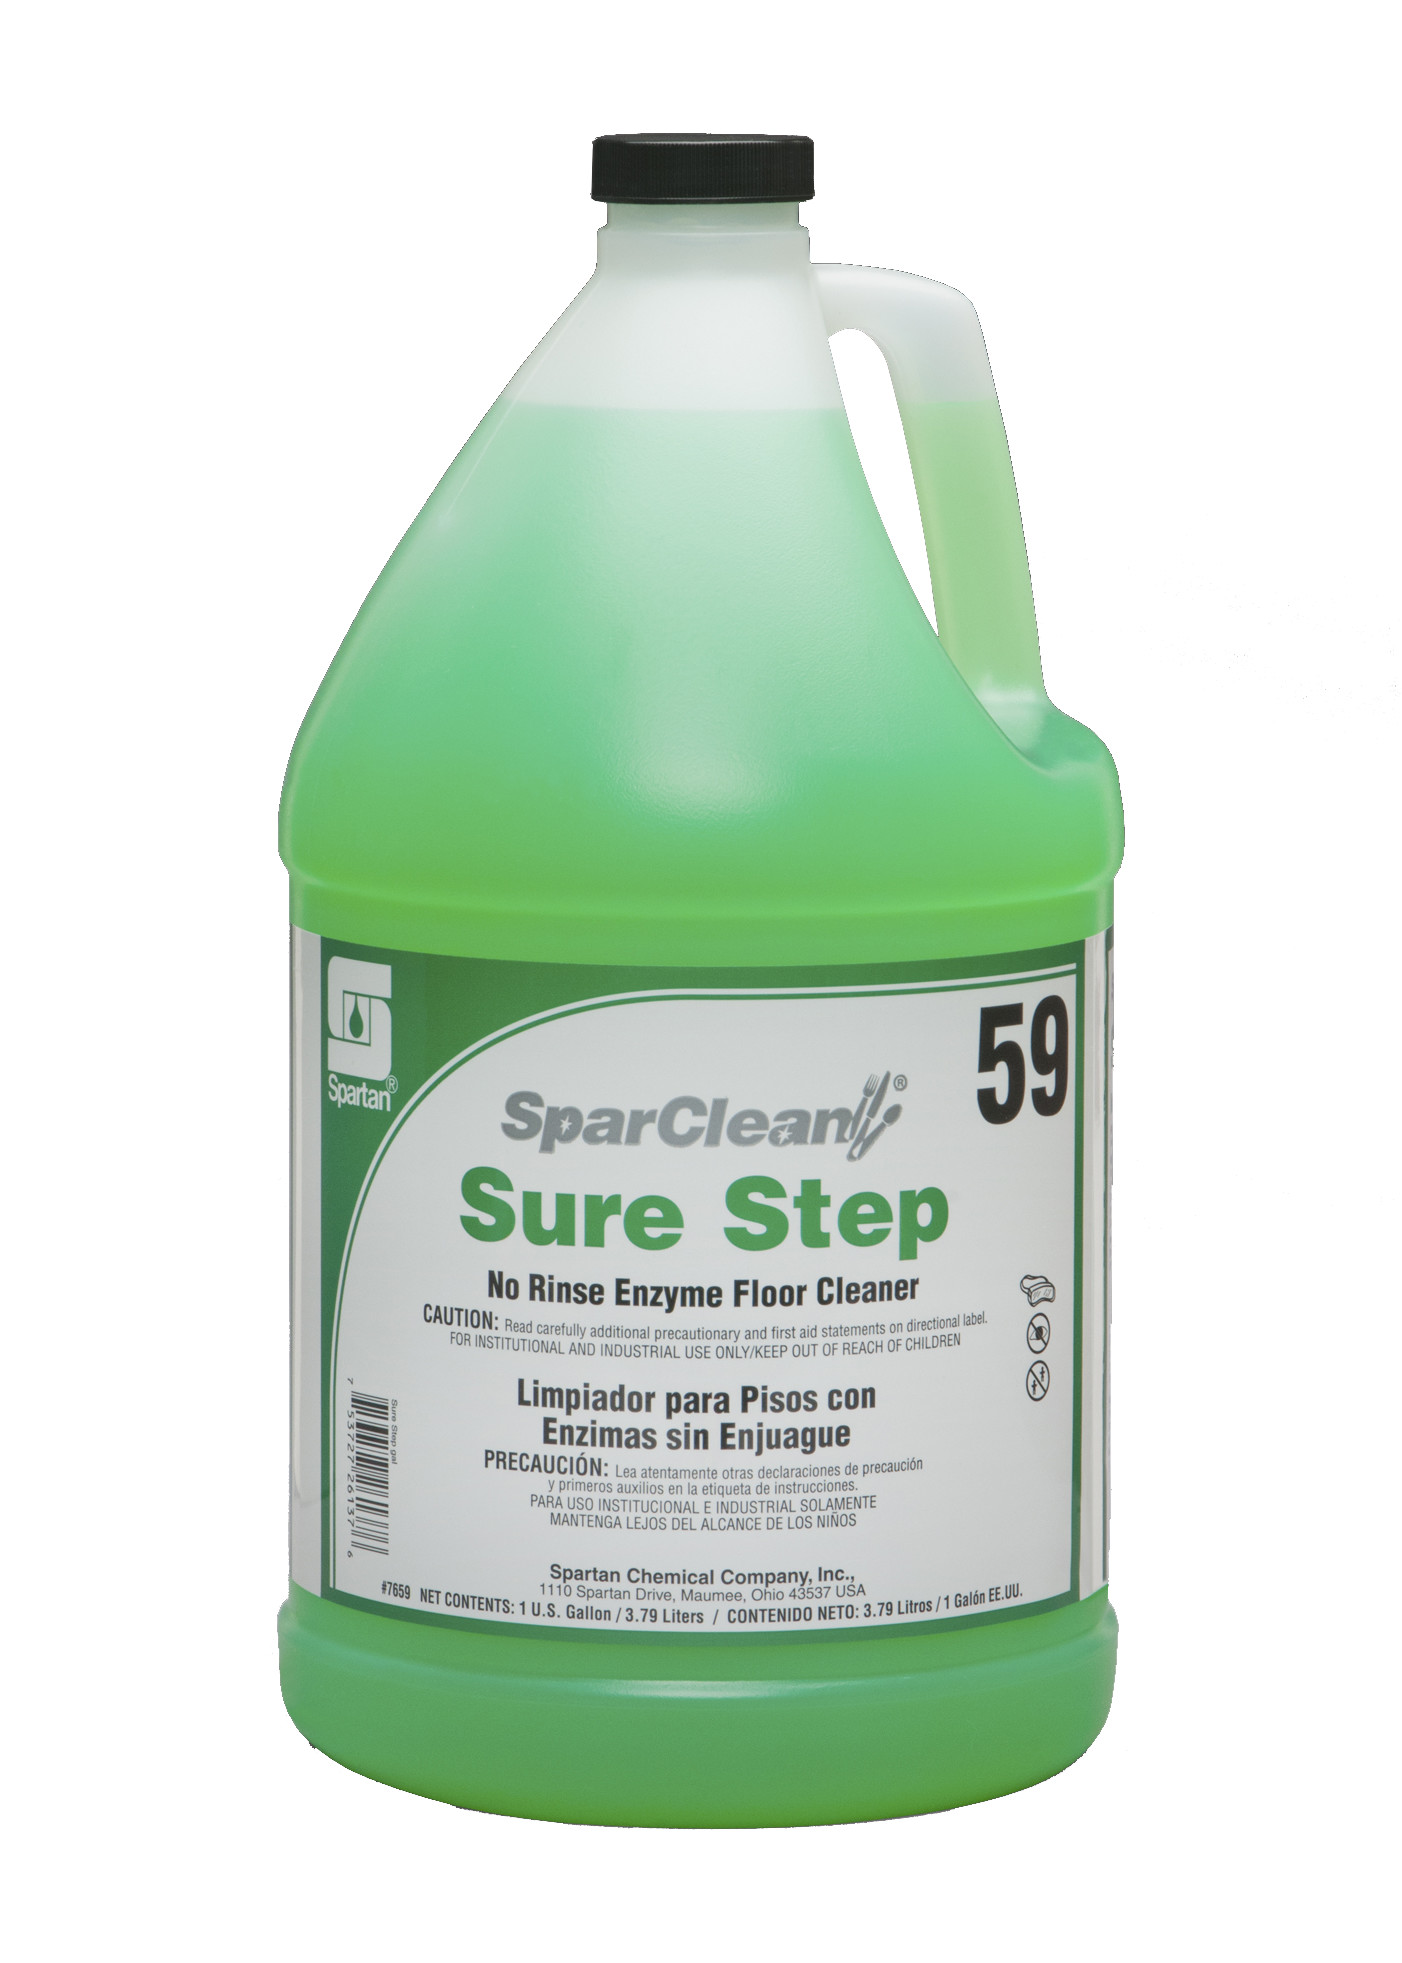 Spartan Chemical Company SparClean Sure Step 59, 1 GAL 4/CSE